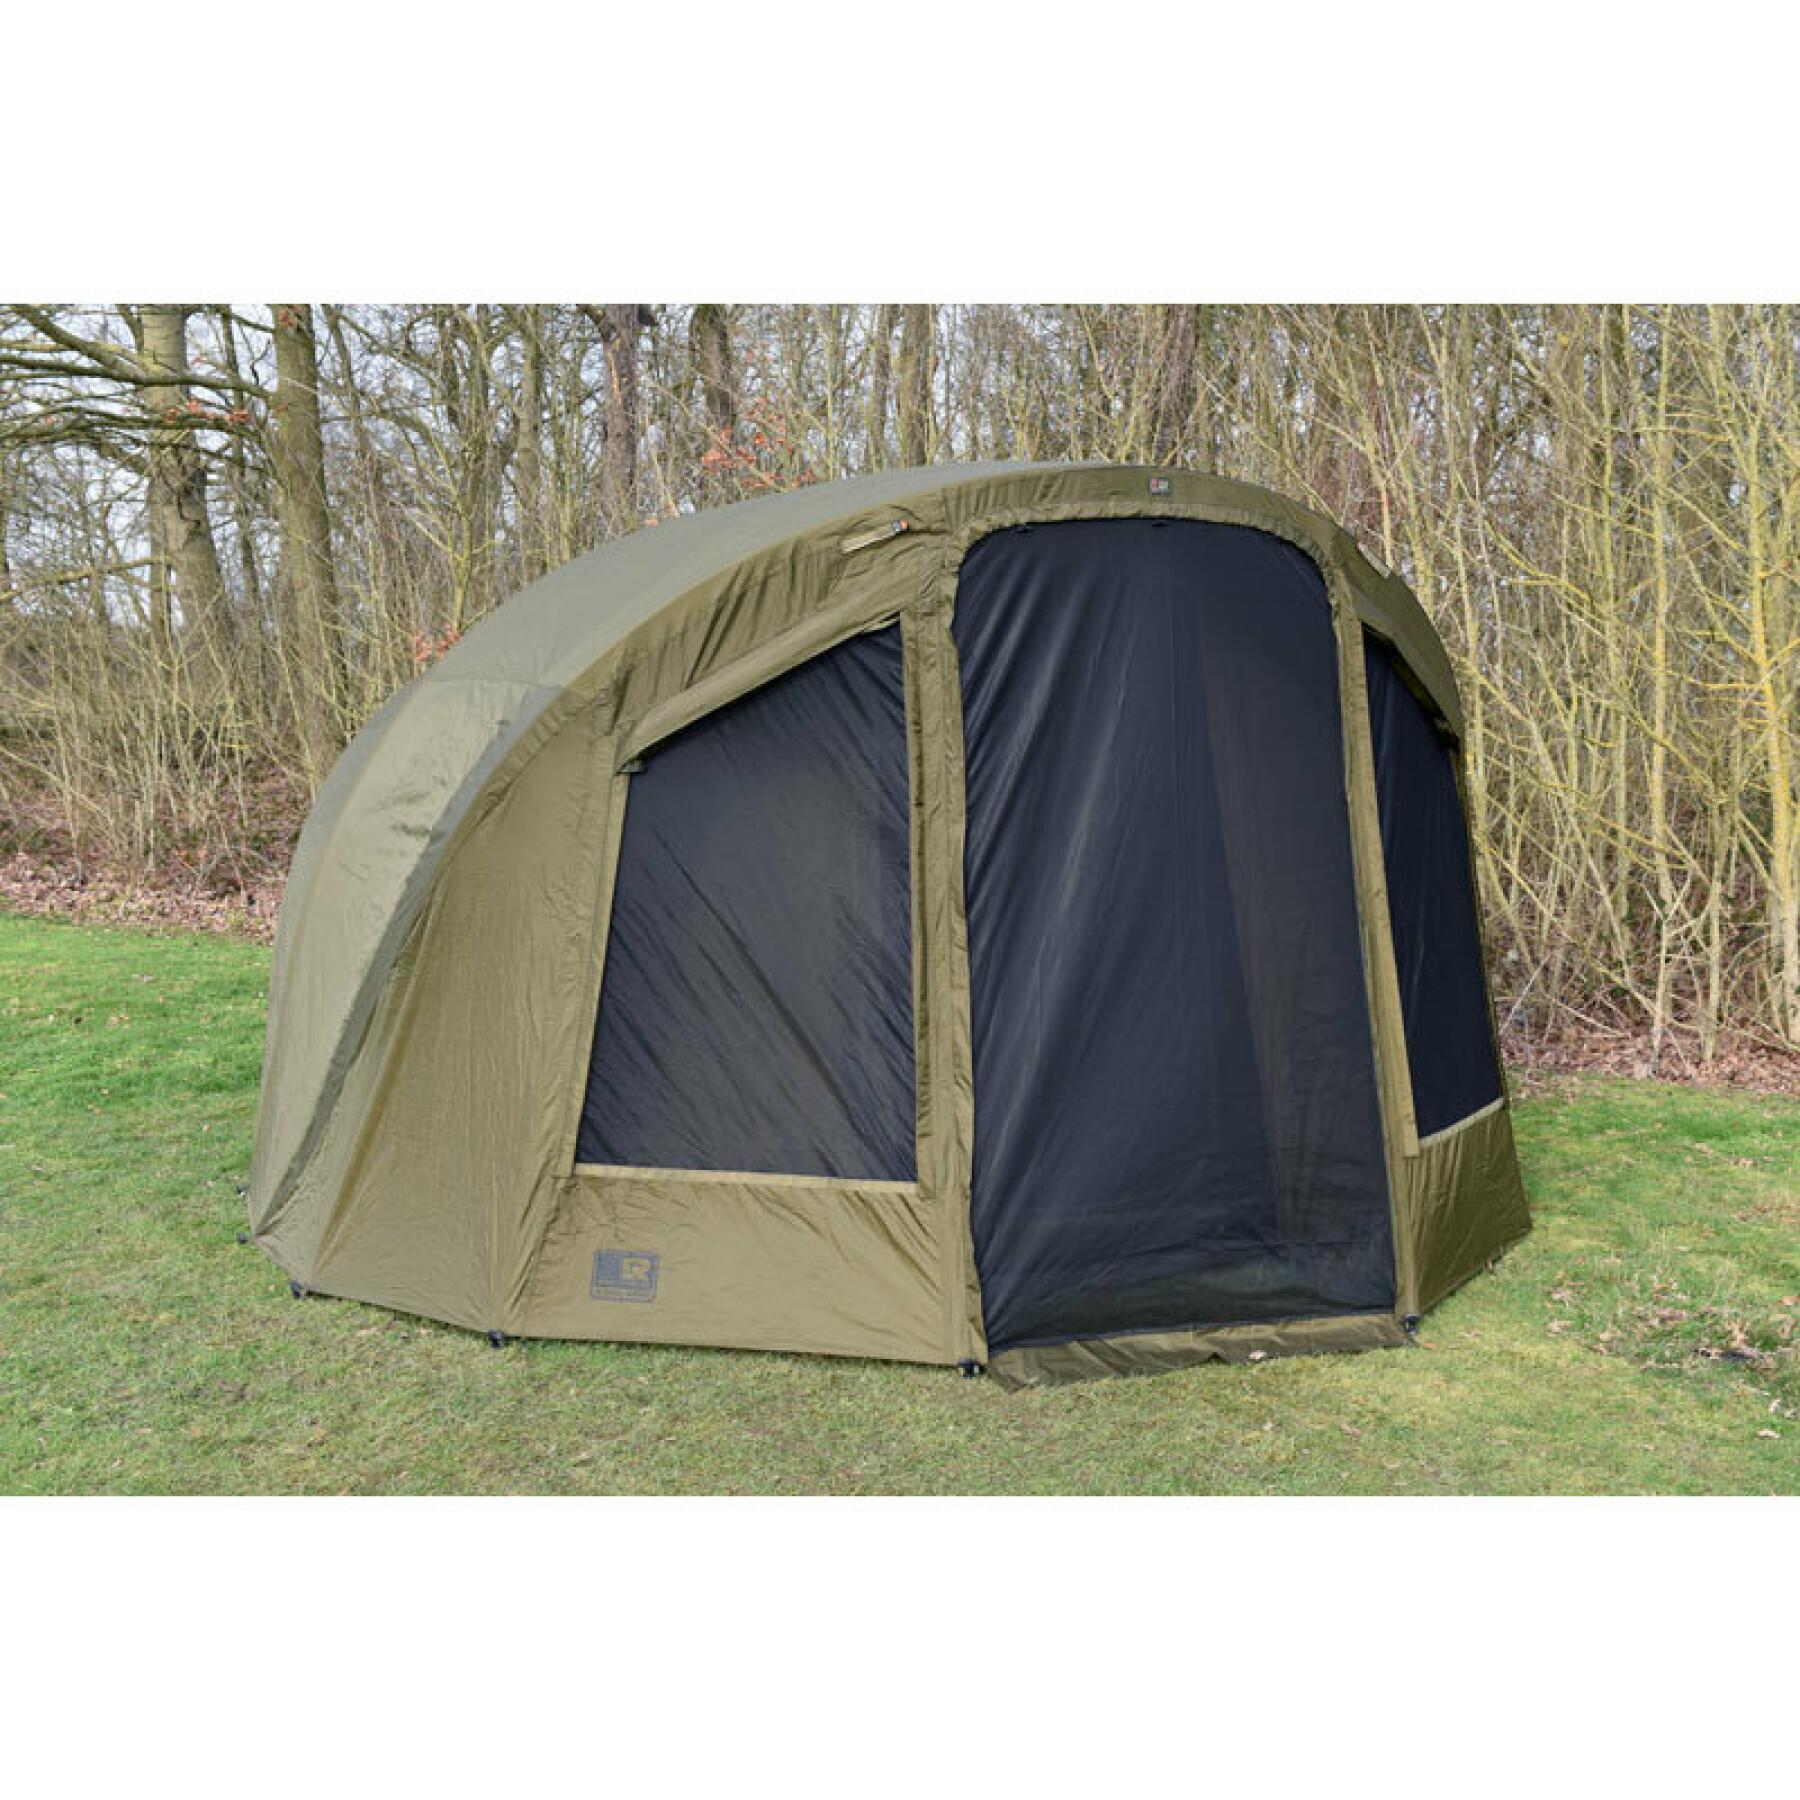 Giant tent Fox R-Series 2 wrap